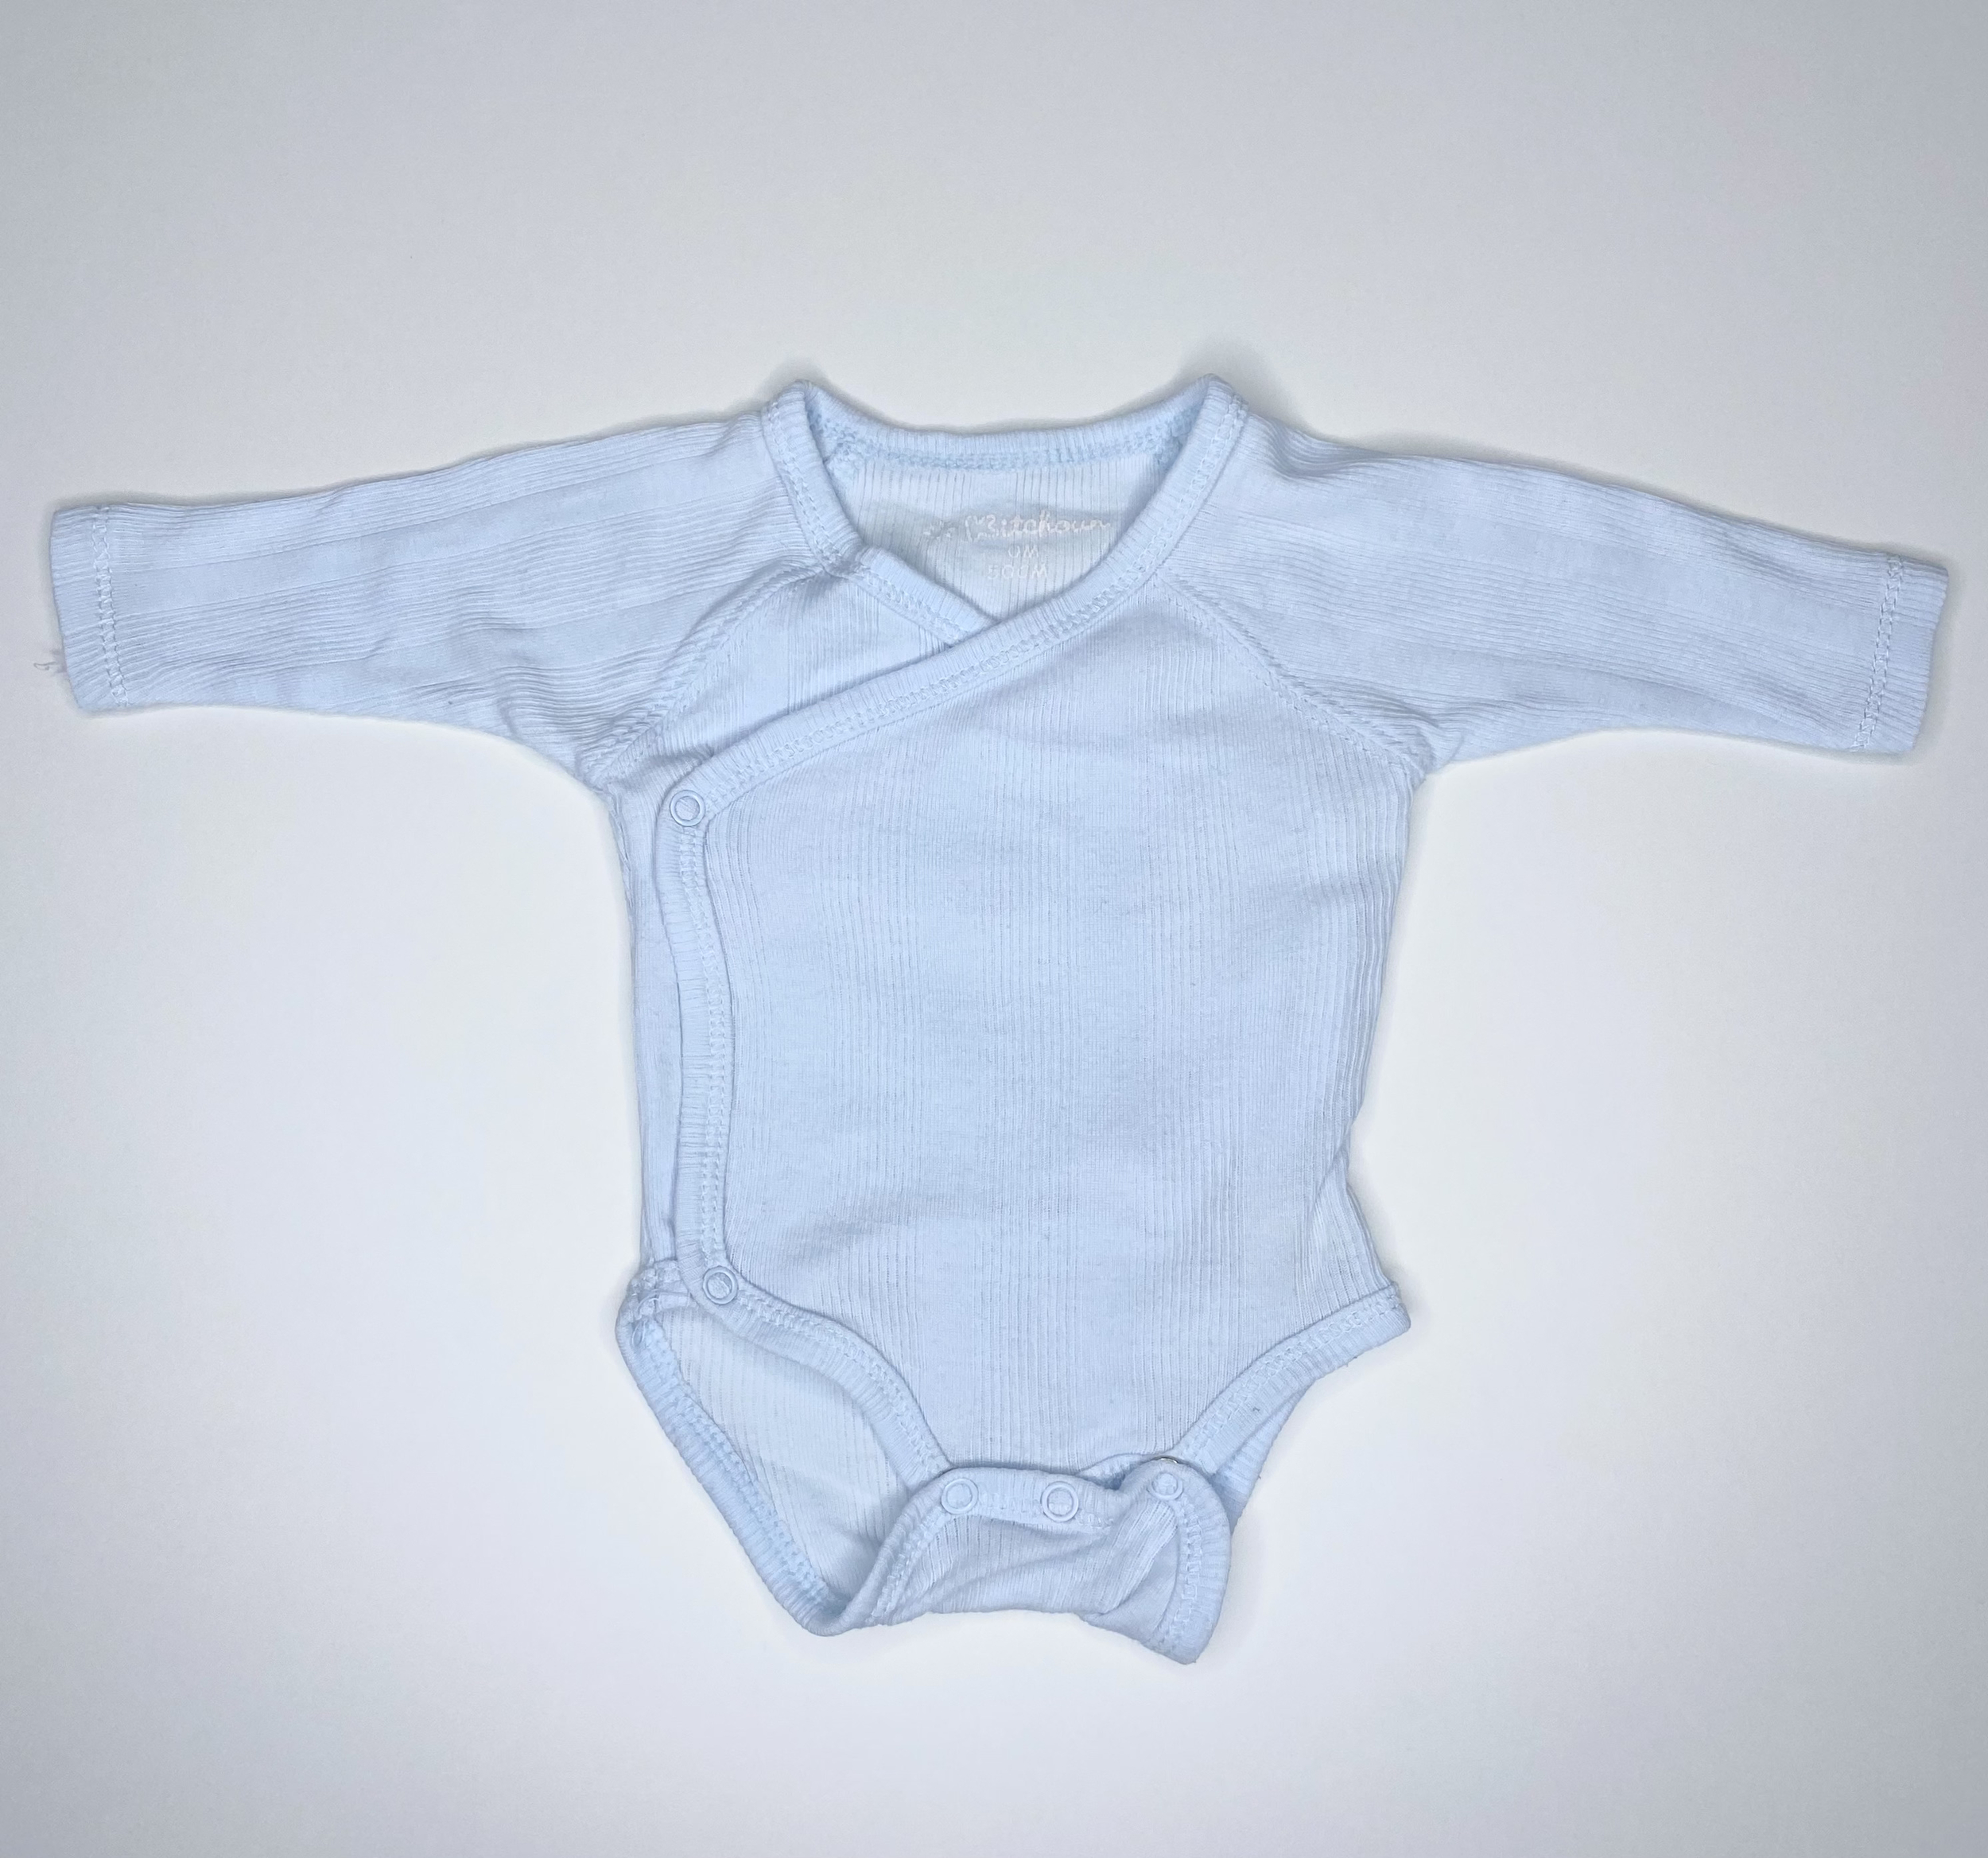 Pyjama Carter's - Bébé fille 0-3 ans/Bodys / Pyjamas - Les petits  Crocod'îles